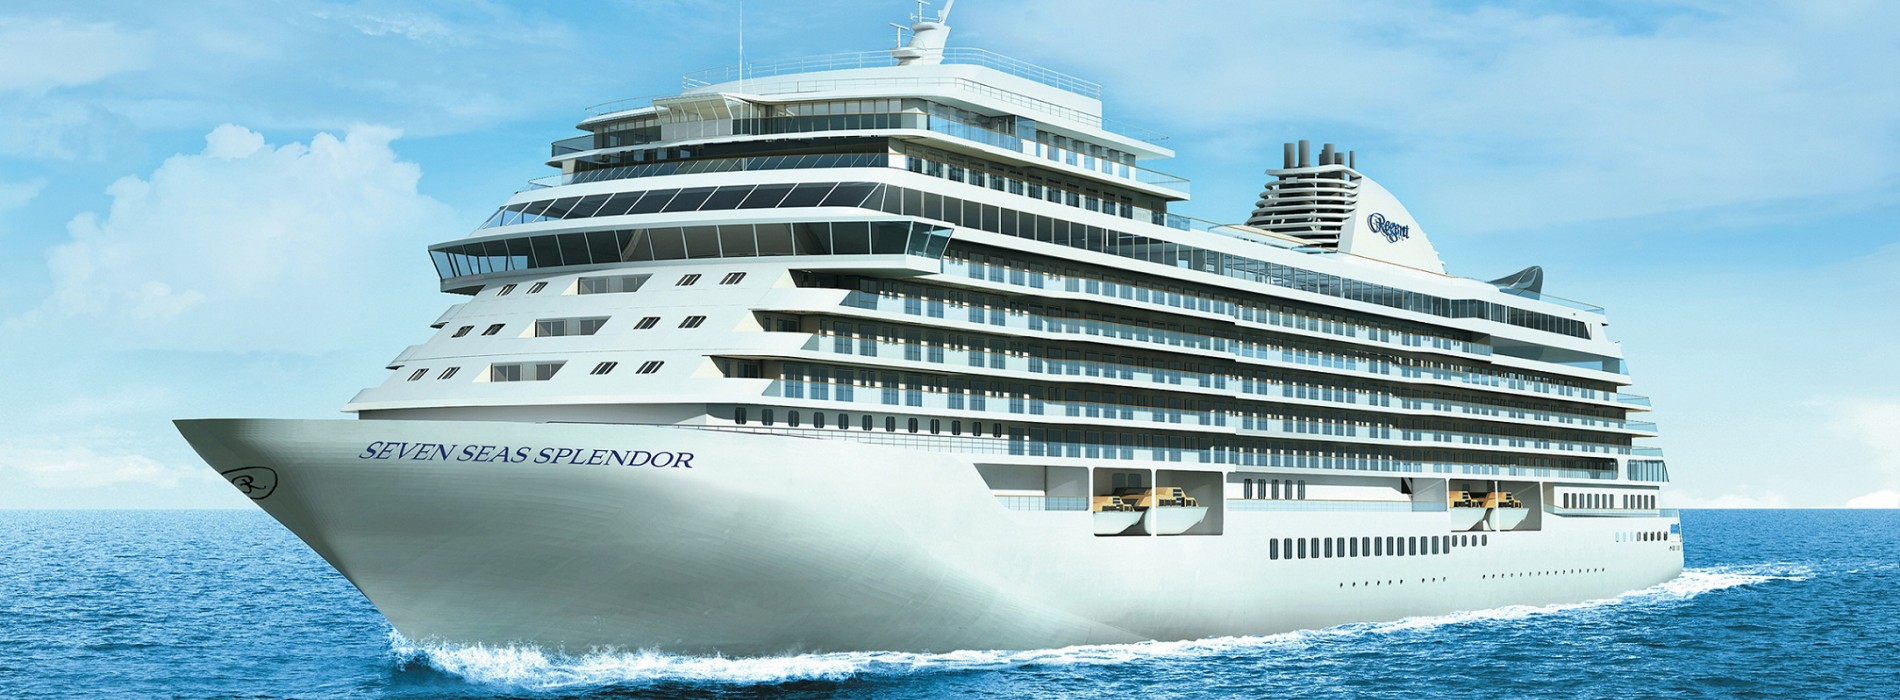 Regent Seven Seas Cruises announces inaugural 2020 summer itineraries for Seven Seas Splendor